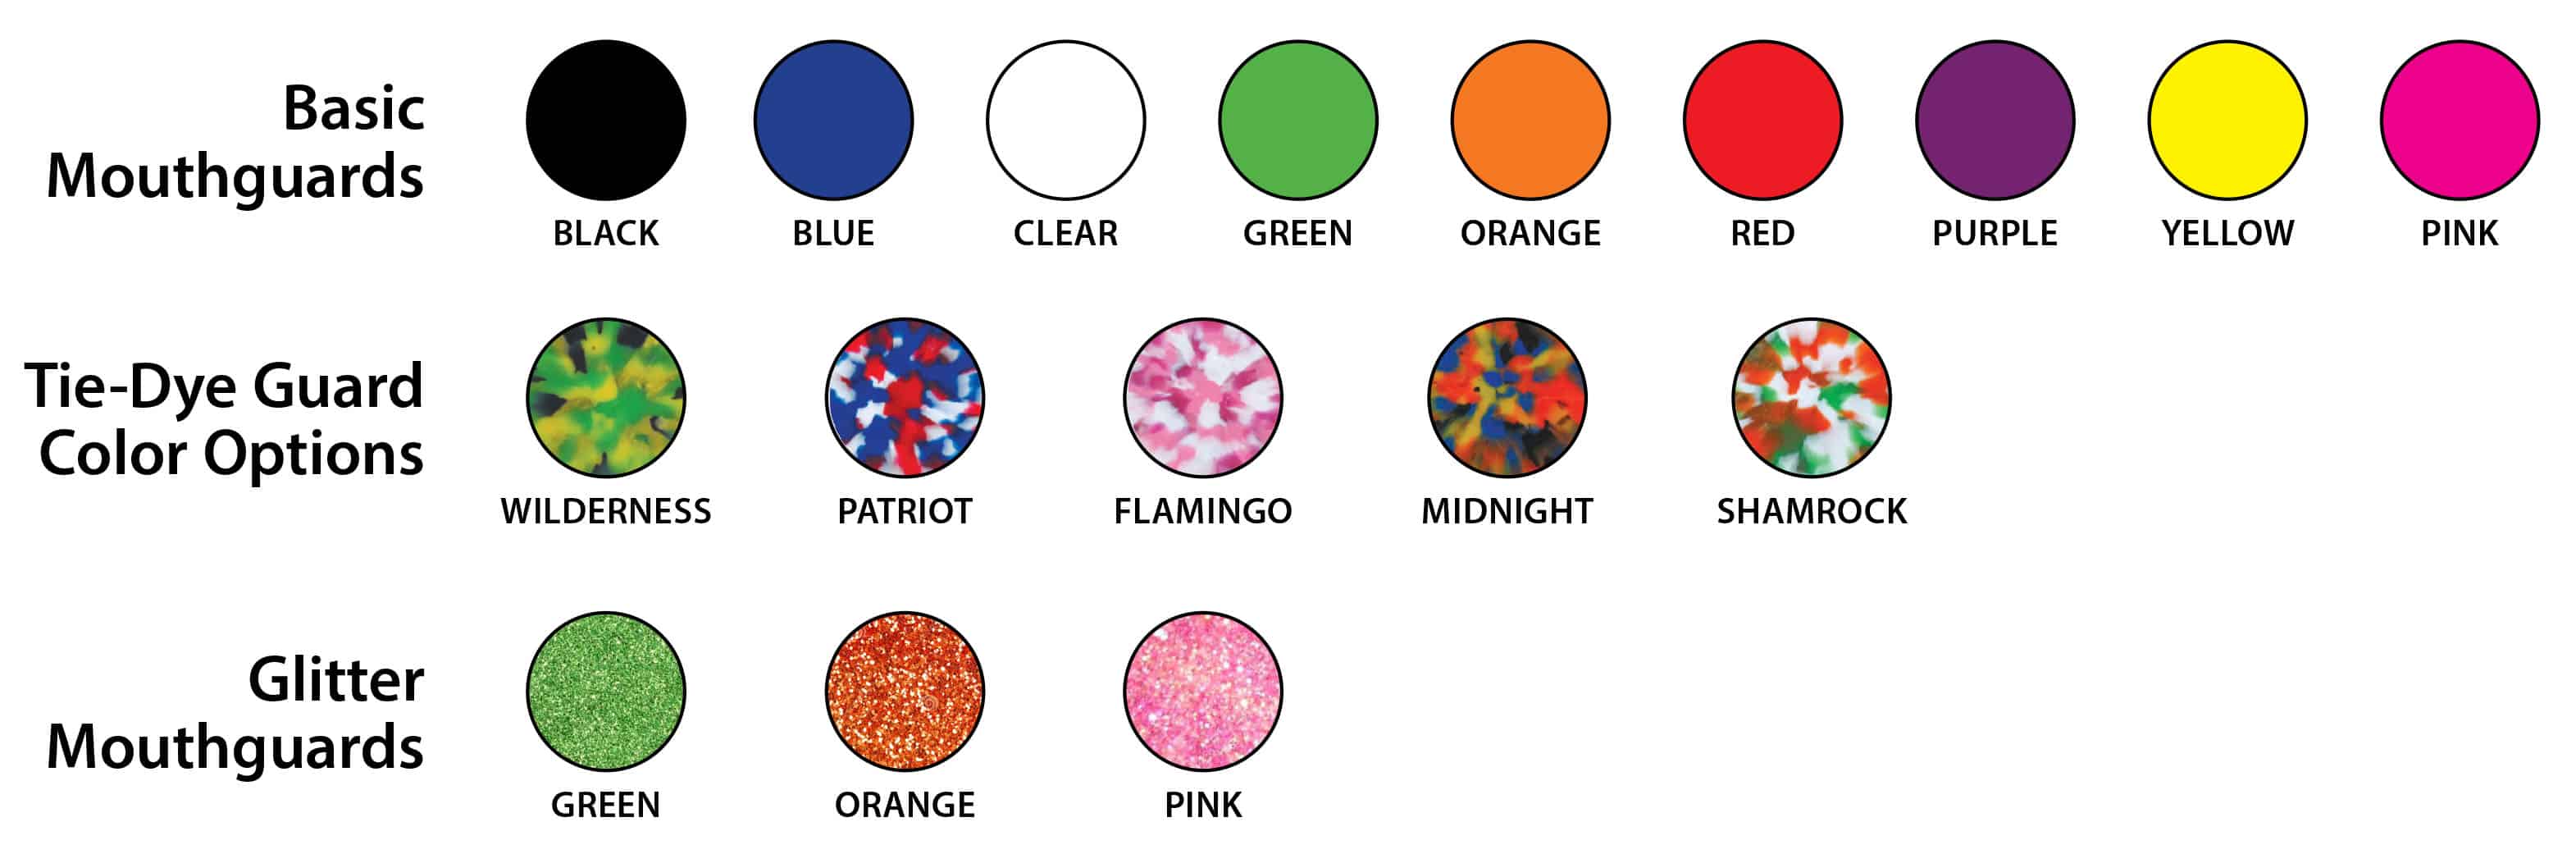 Pro-Form Mouthguard Color Choices